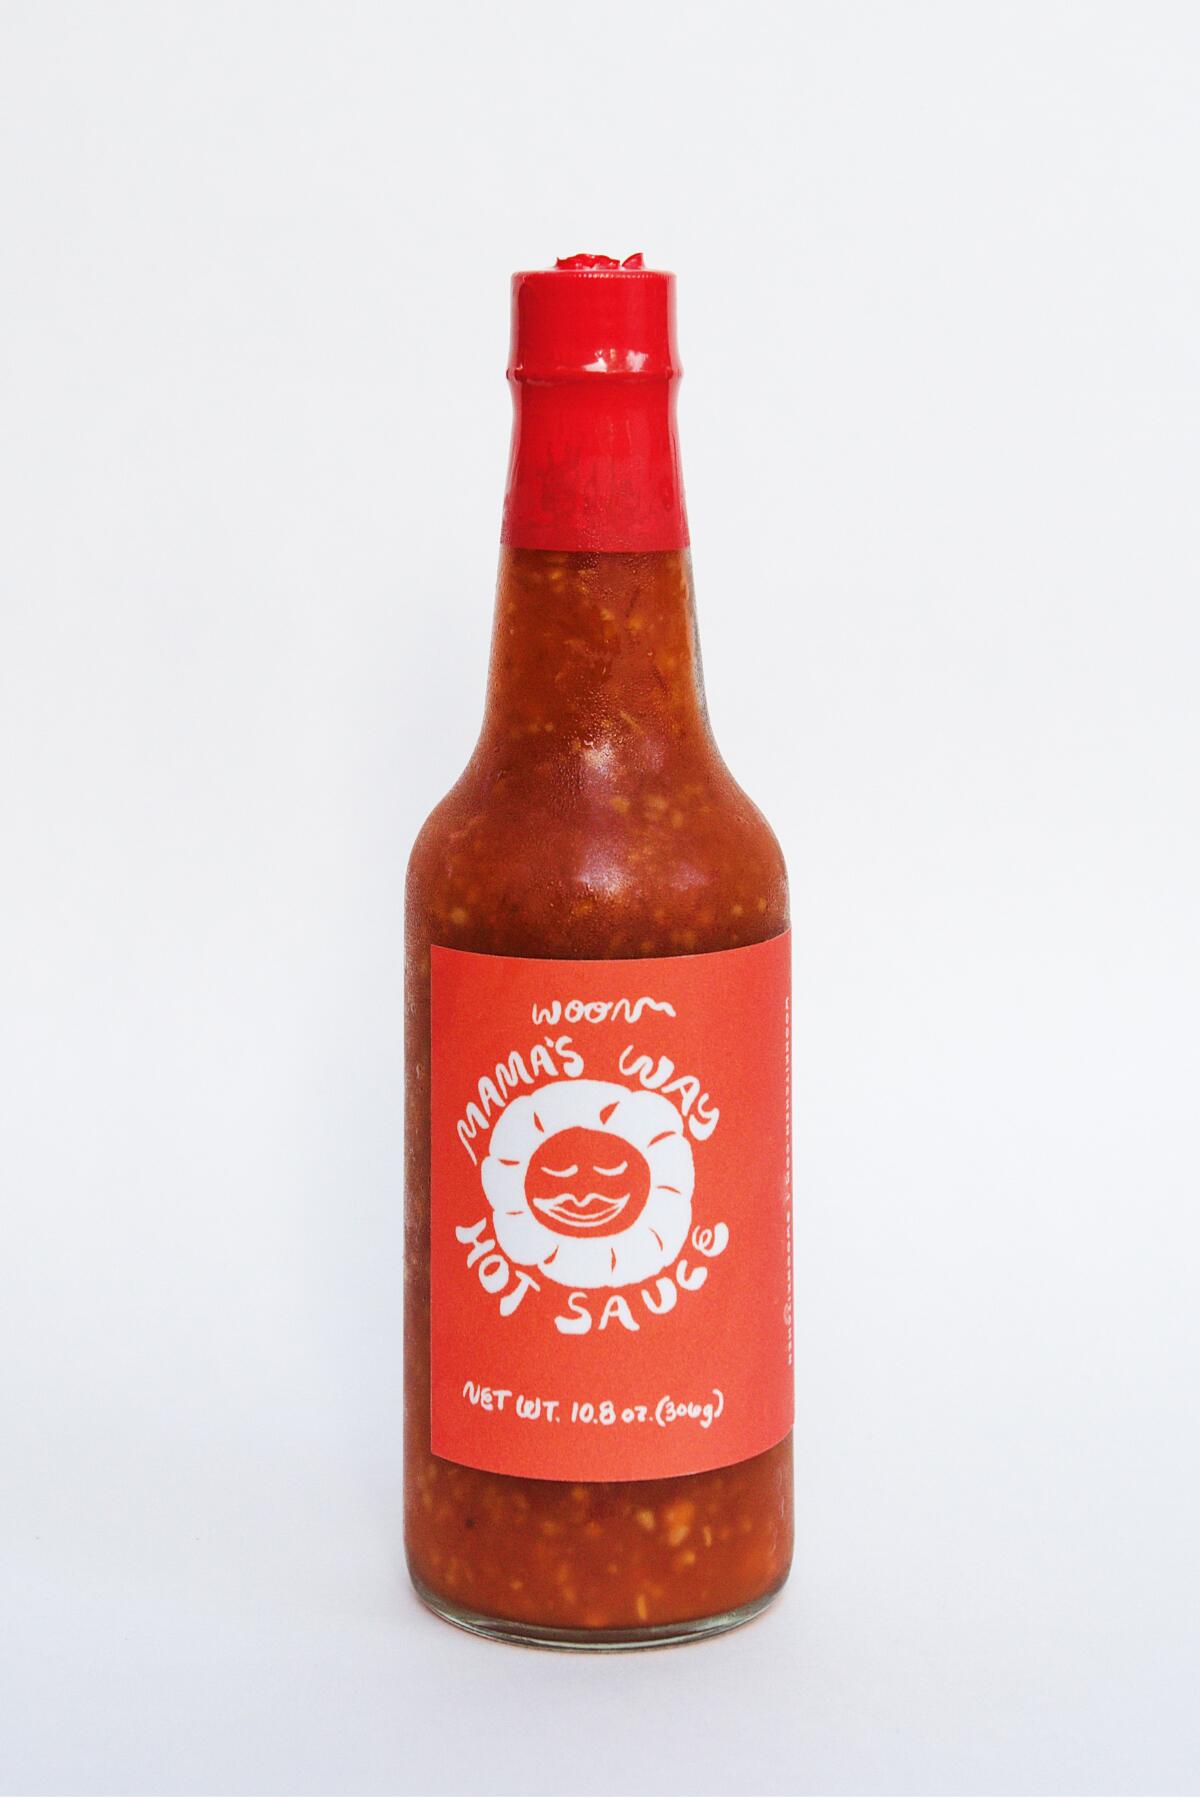 Woon's Mama’s Way hot sauce.